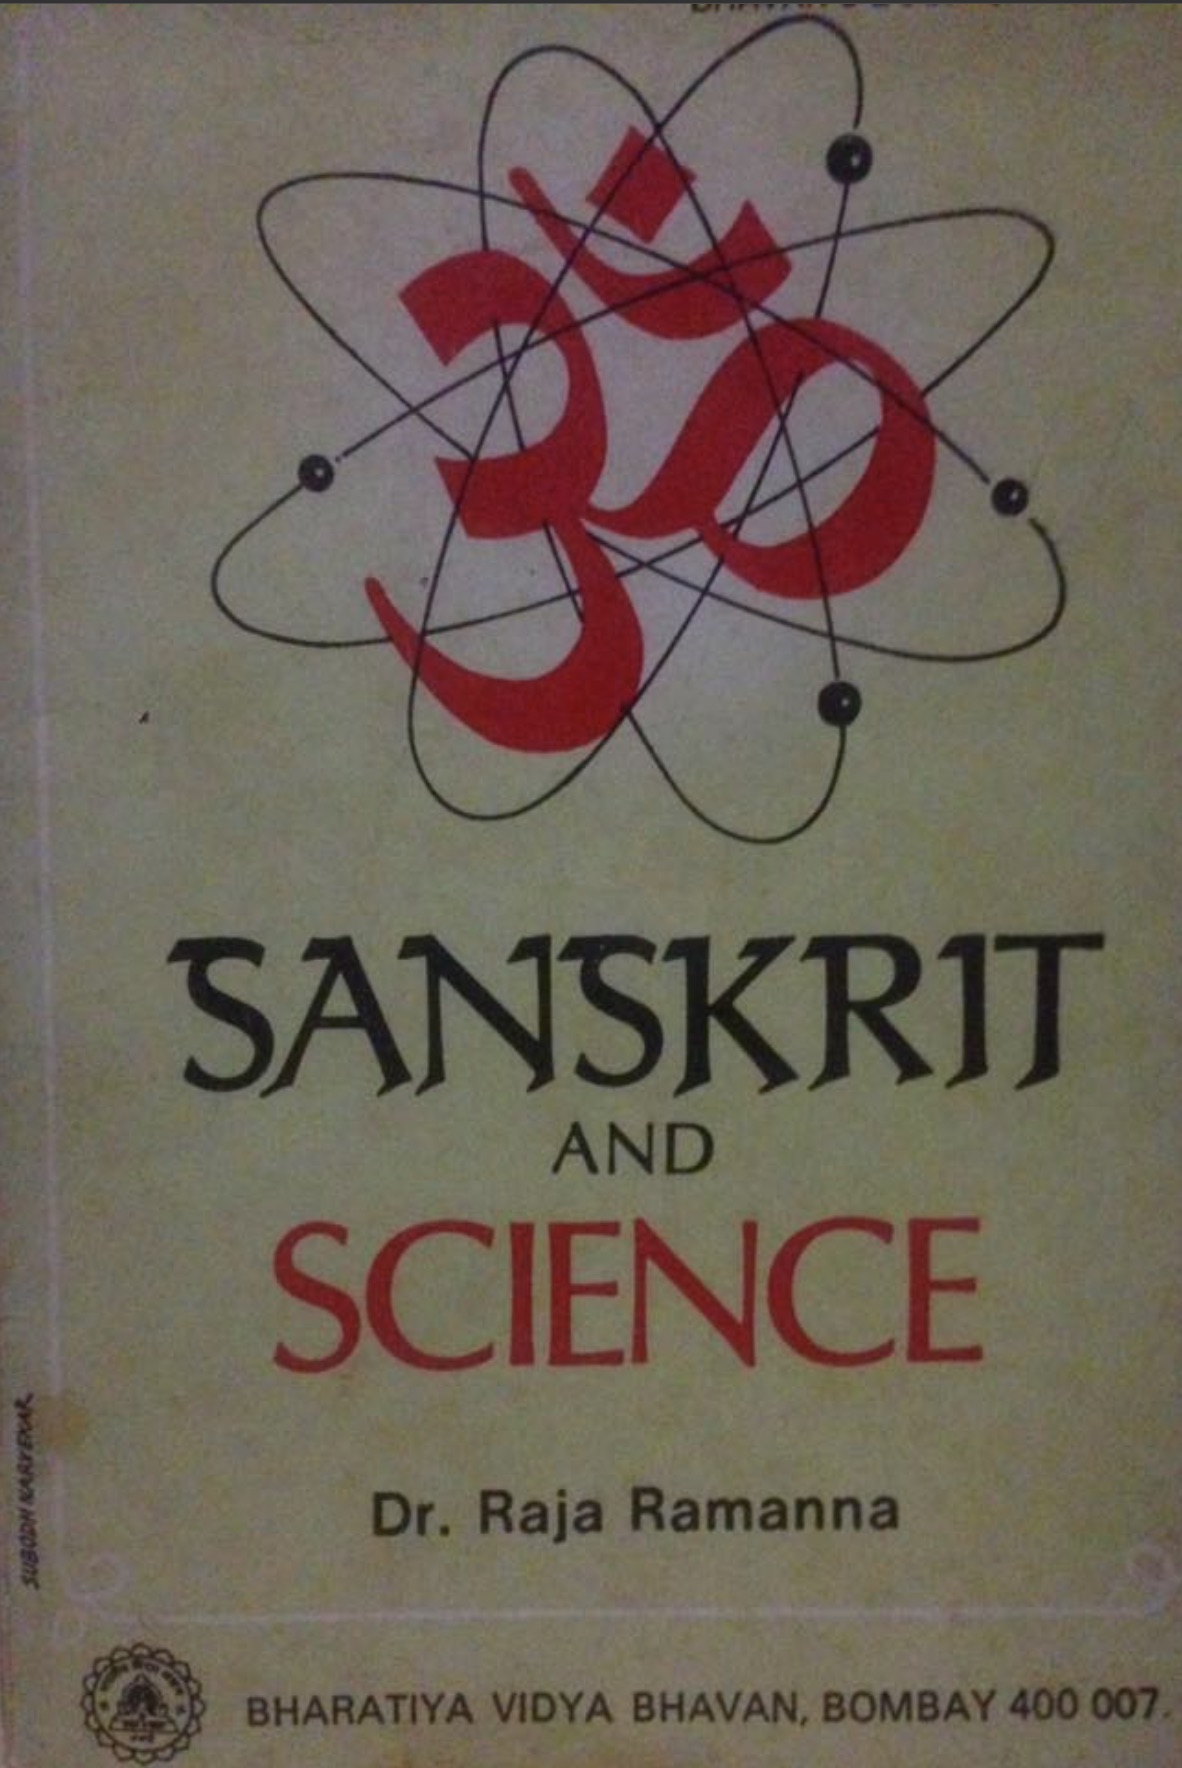 Sanskrit and Science book by Dr. Raja Ramanna